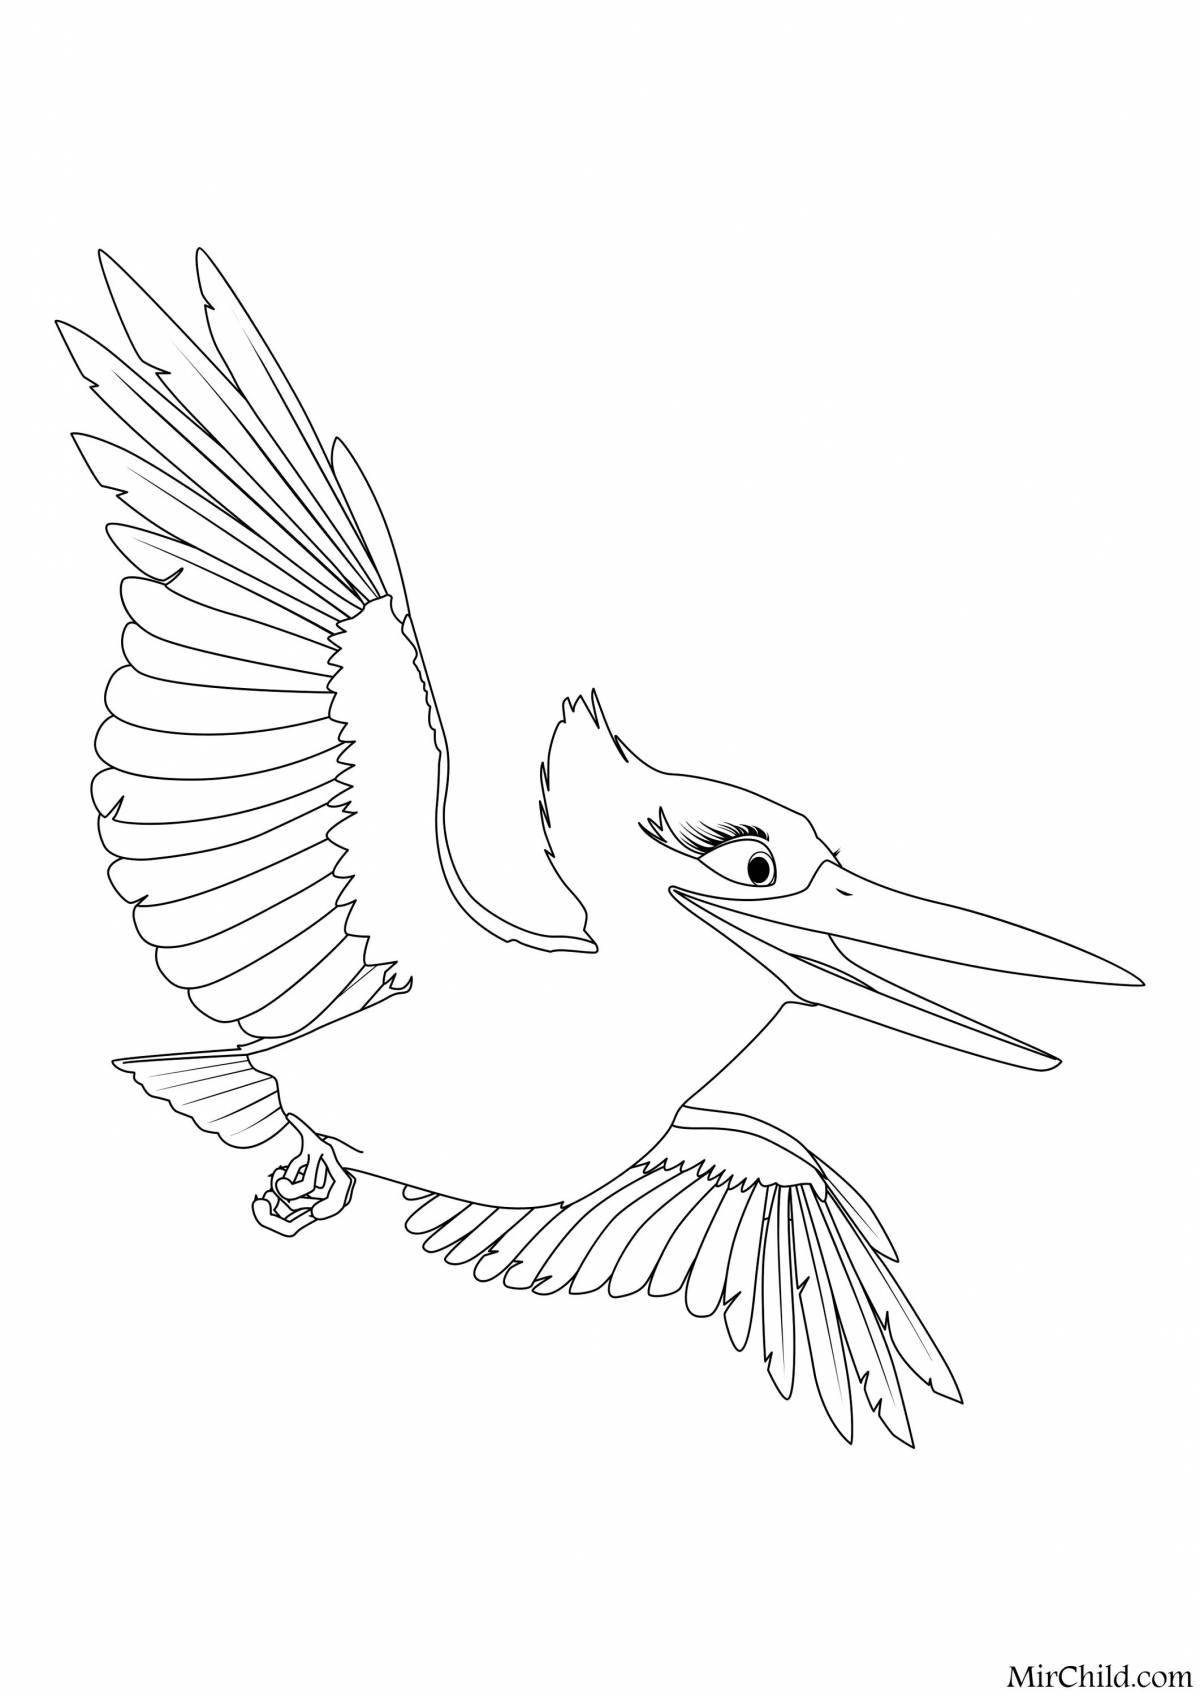 Rampant kingfisher coloring page